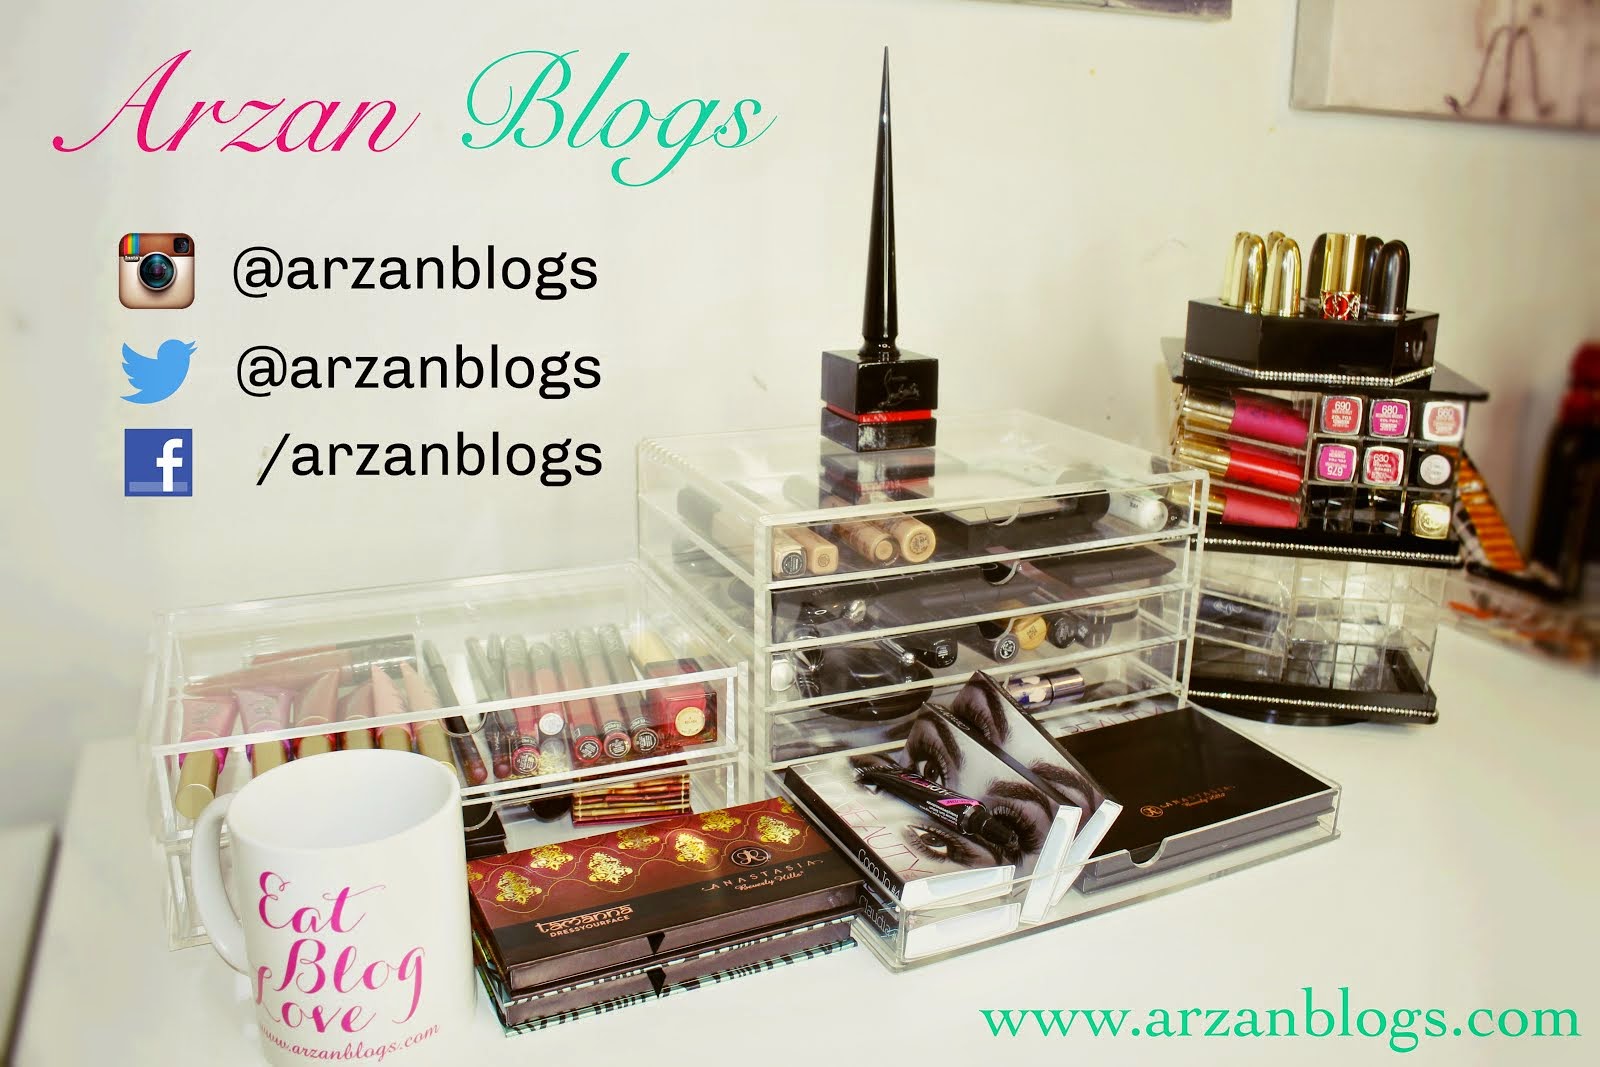 www.arzanblogs.com